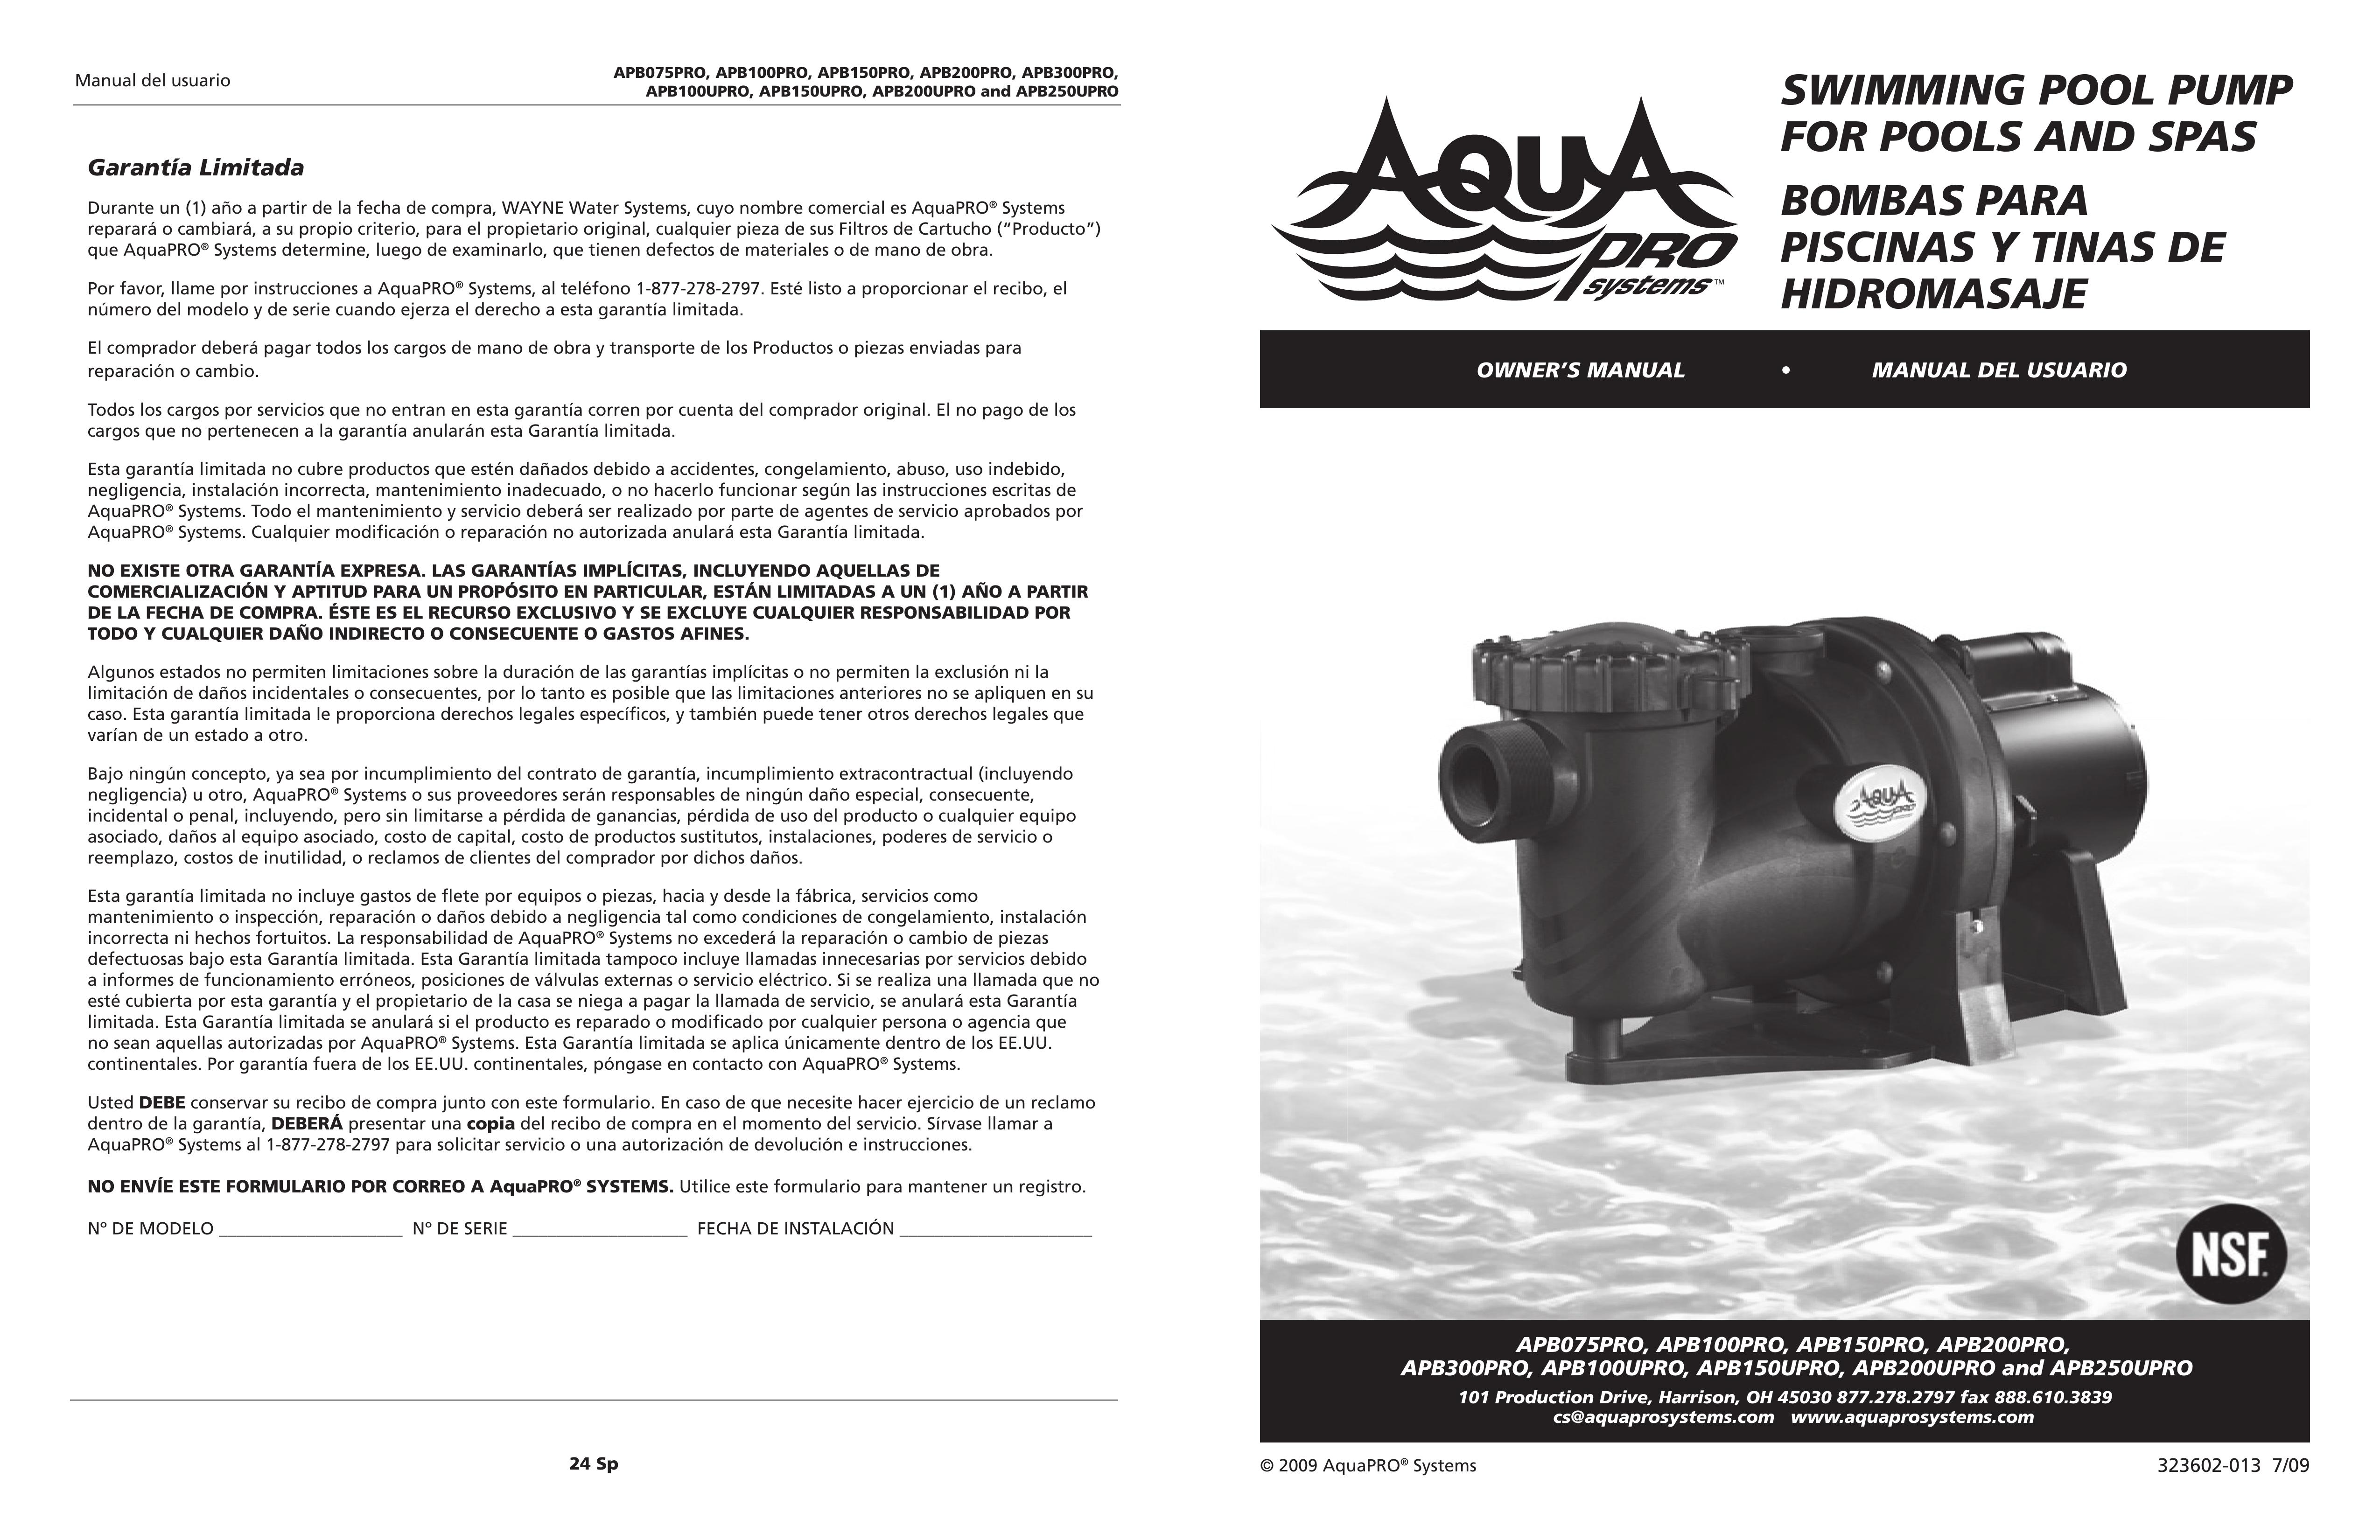 AquaPRO APB250UPRO Swimming Pool Pump User Manual